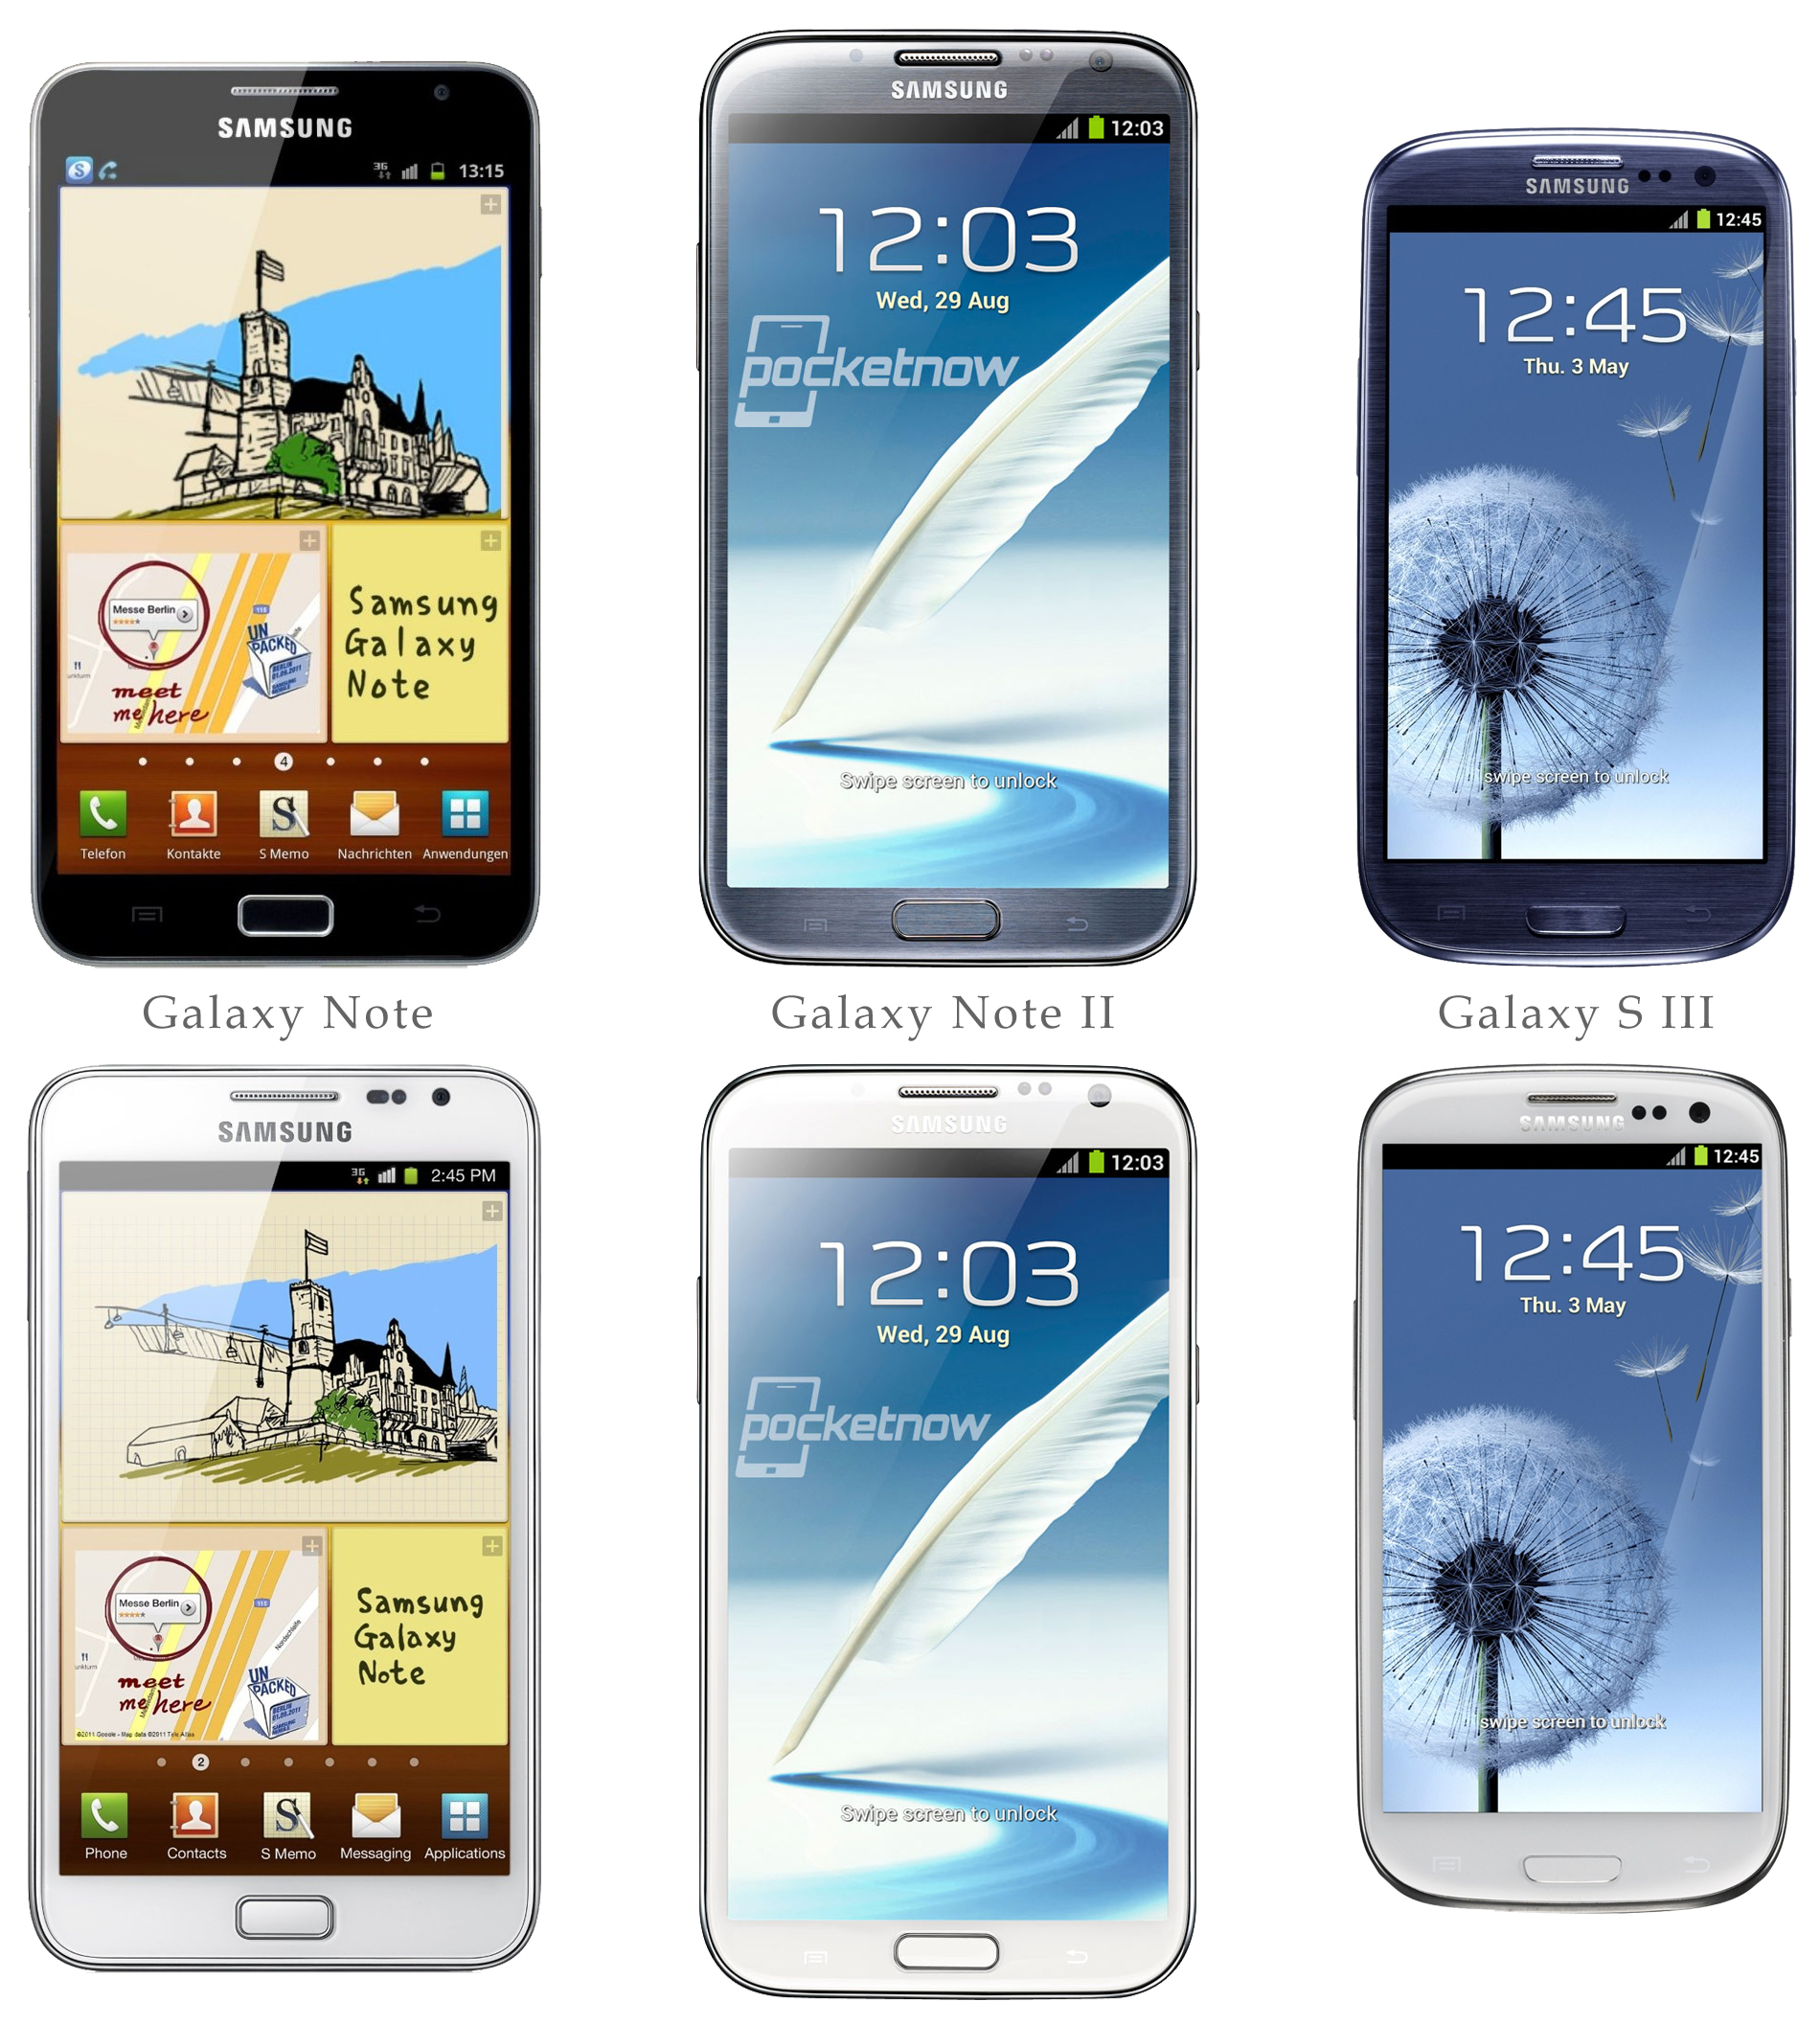 Телефон Samsung Galaxy M